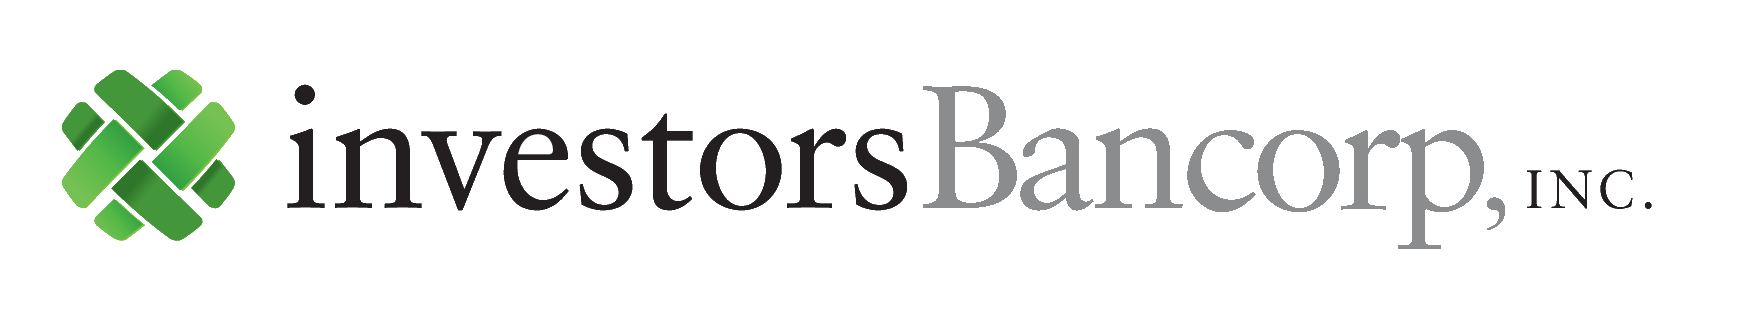 Bancorp Logo - Investors Relations | Investors Bank